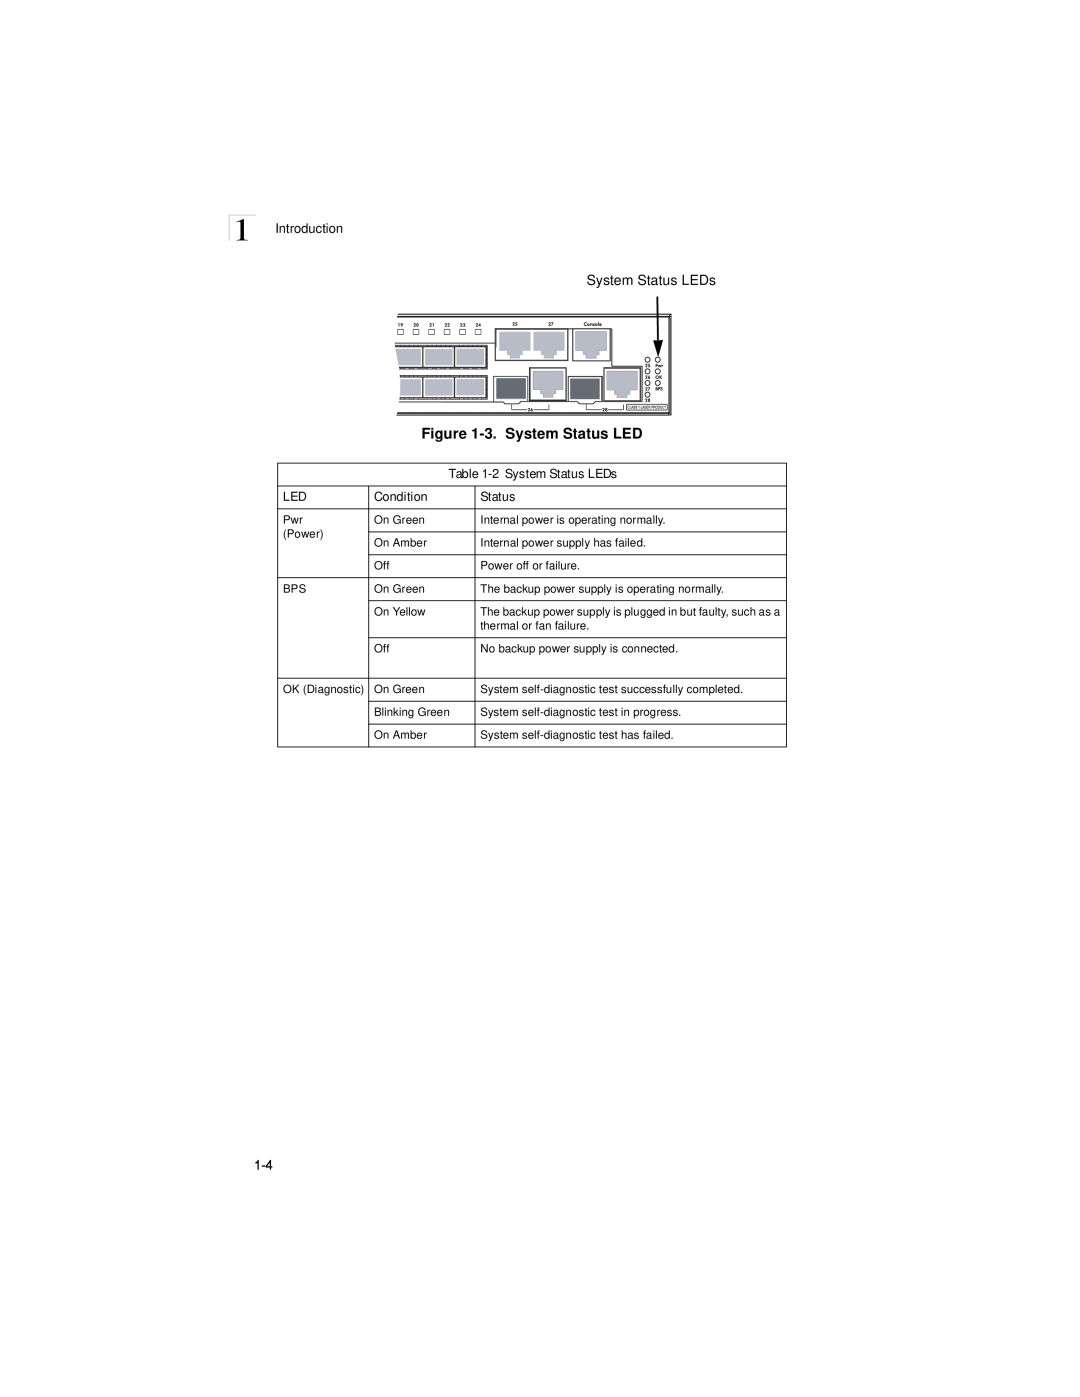 Transition Networks SM24-100SFP-AH manual 3. System Status LED -2 System Status LEDs, Condition, OK Diagnostic 